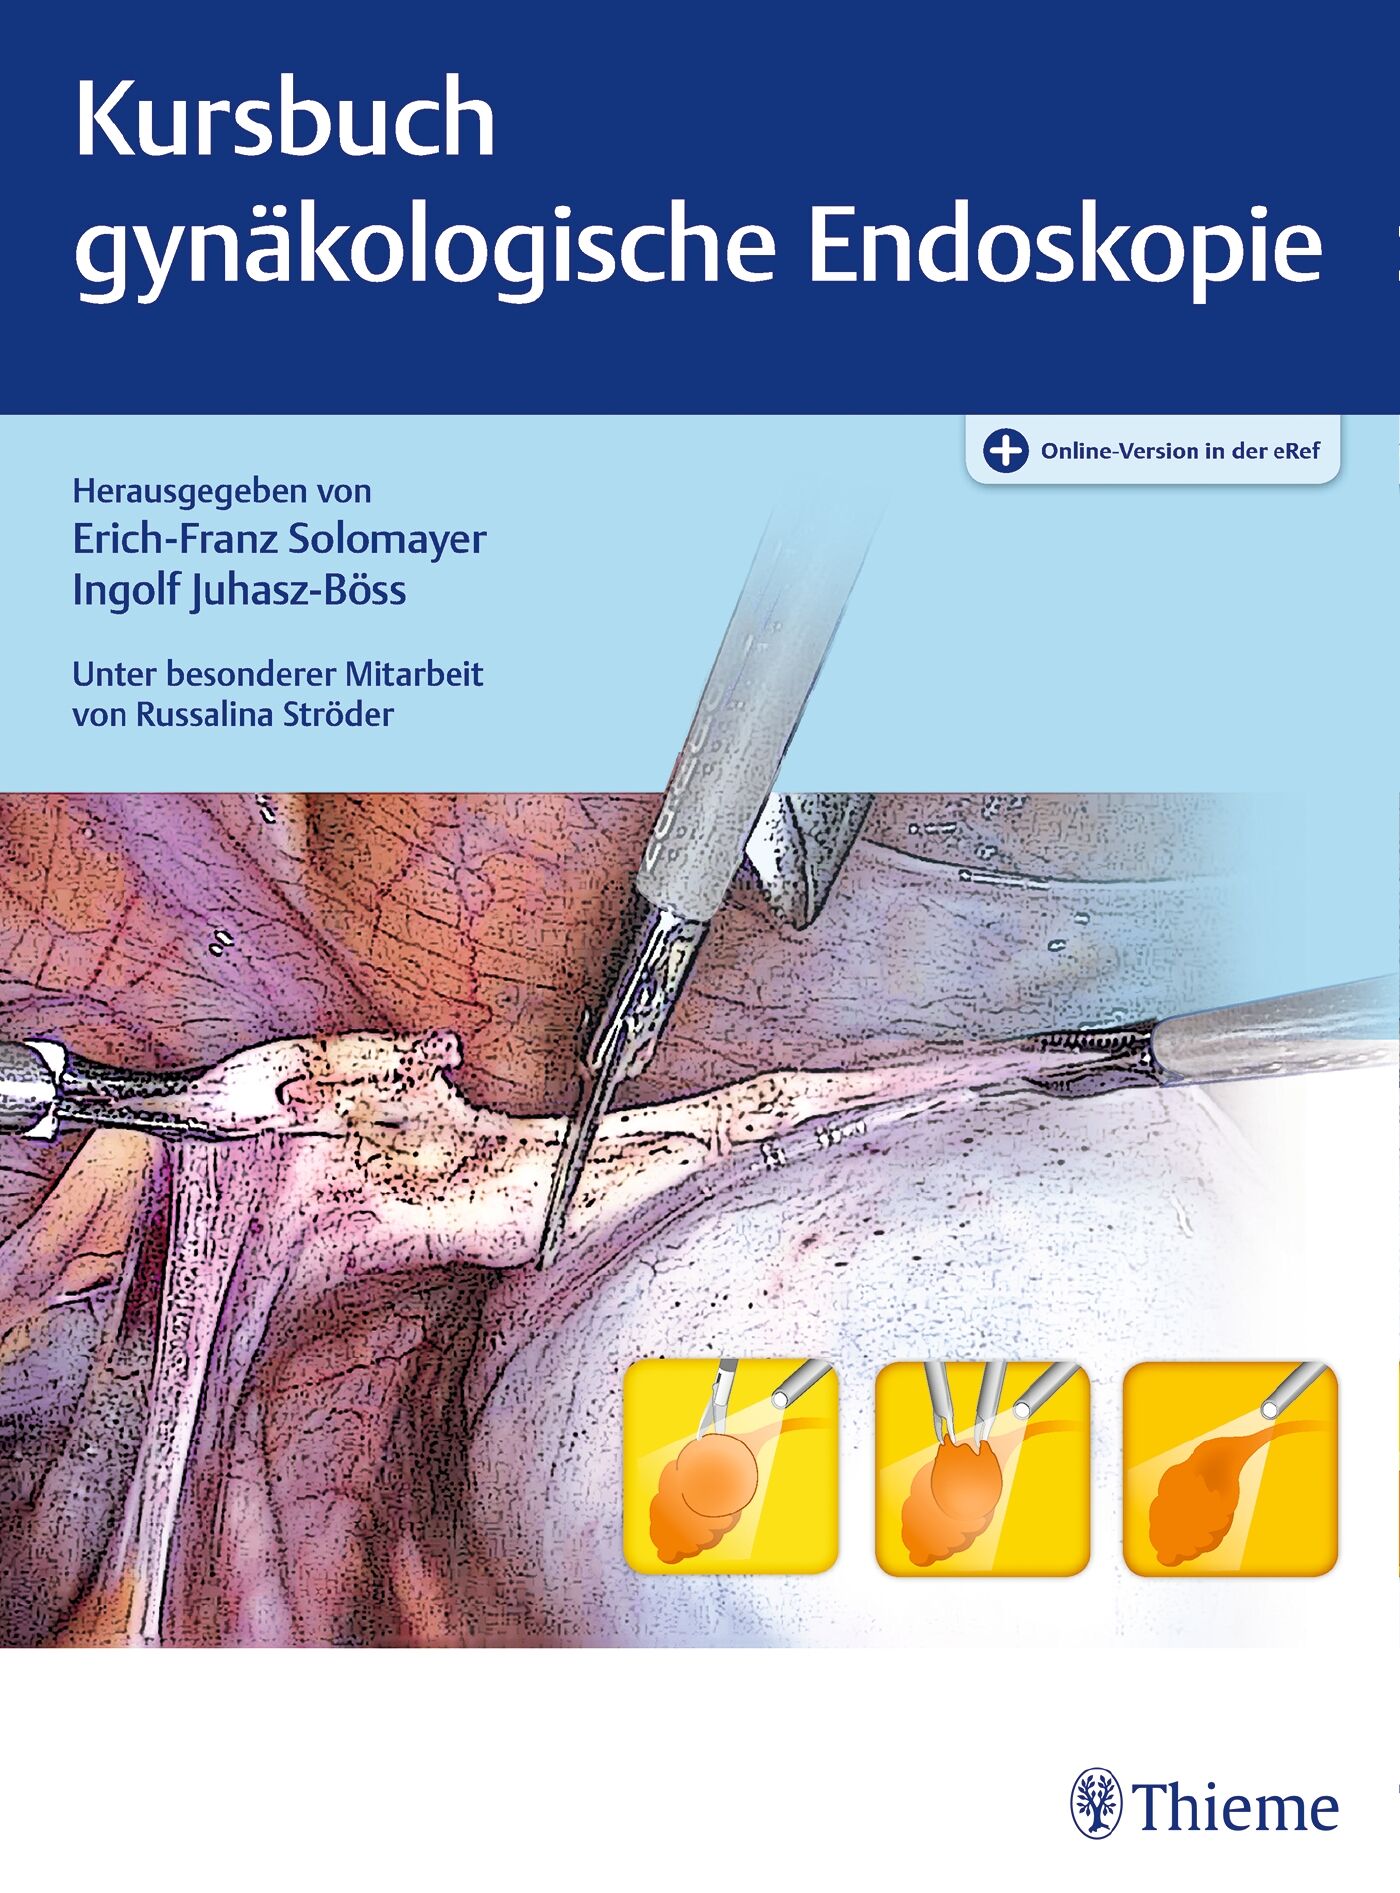 Kursbuch Gynäkologische Endoskopie, 9783132400047